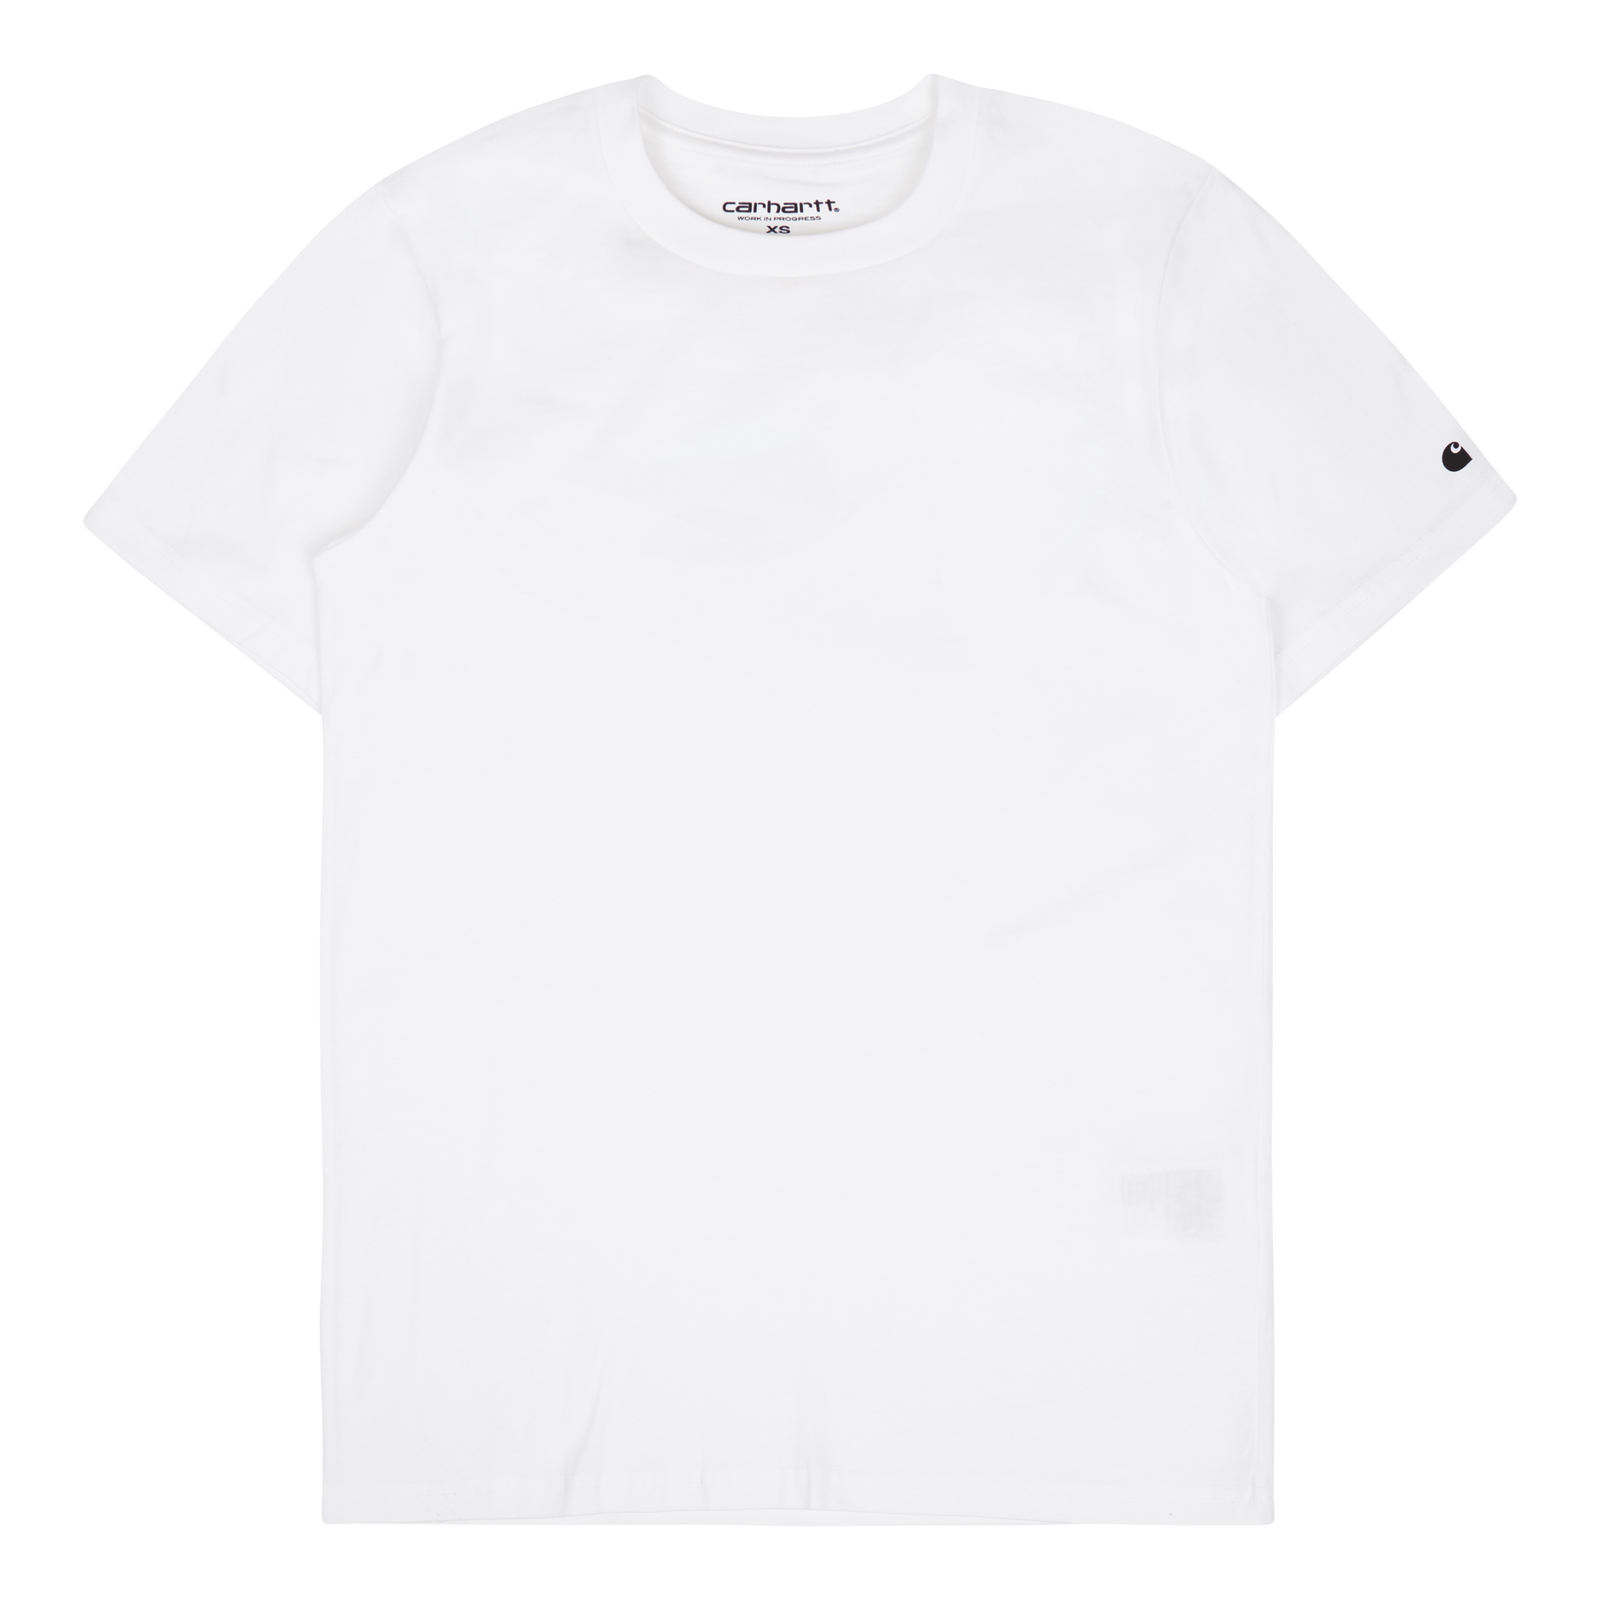 S/s Base T-shirt